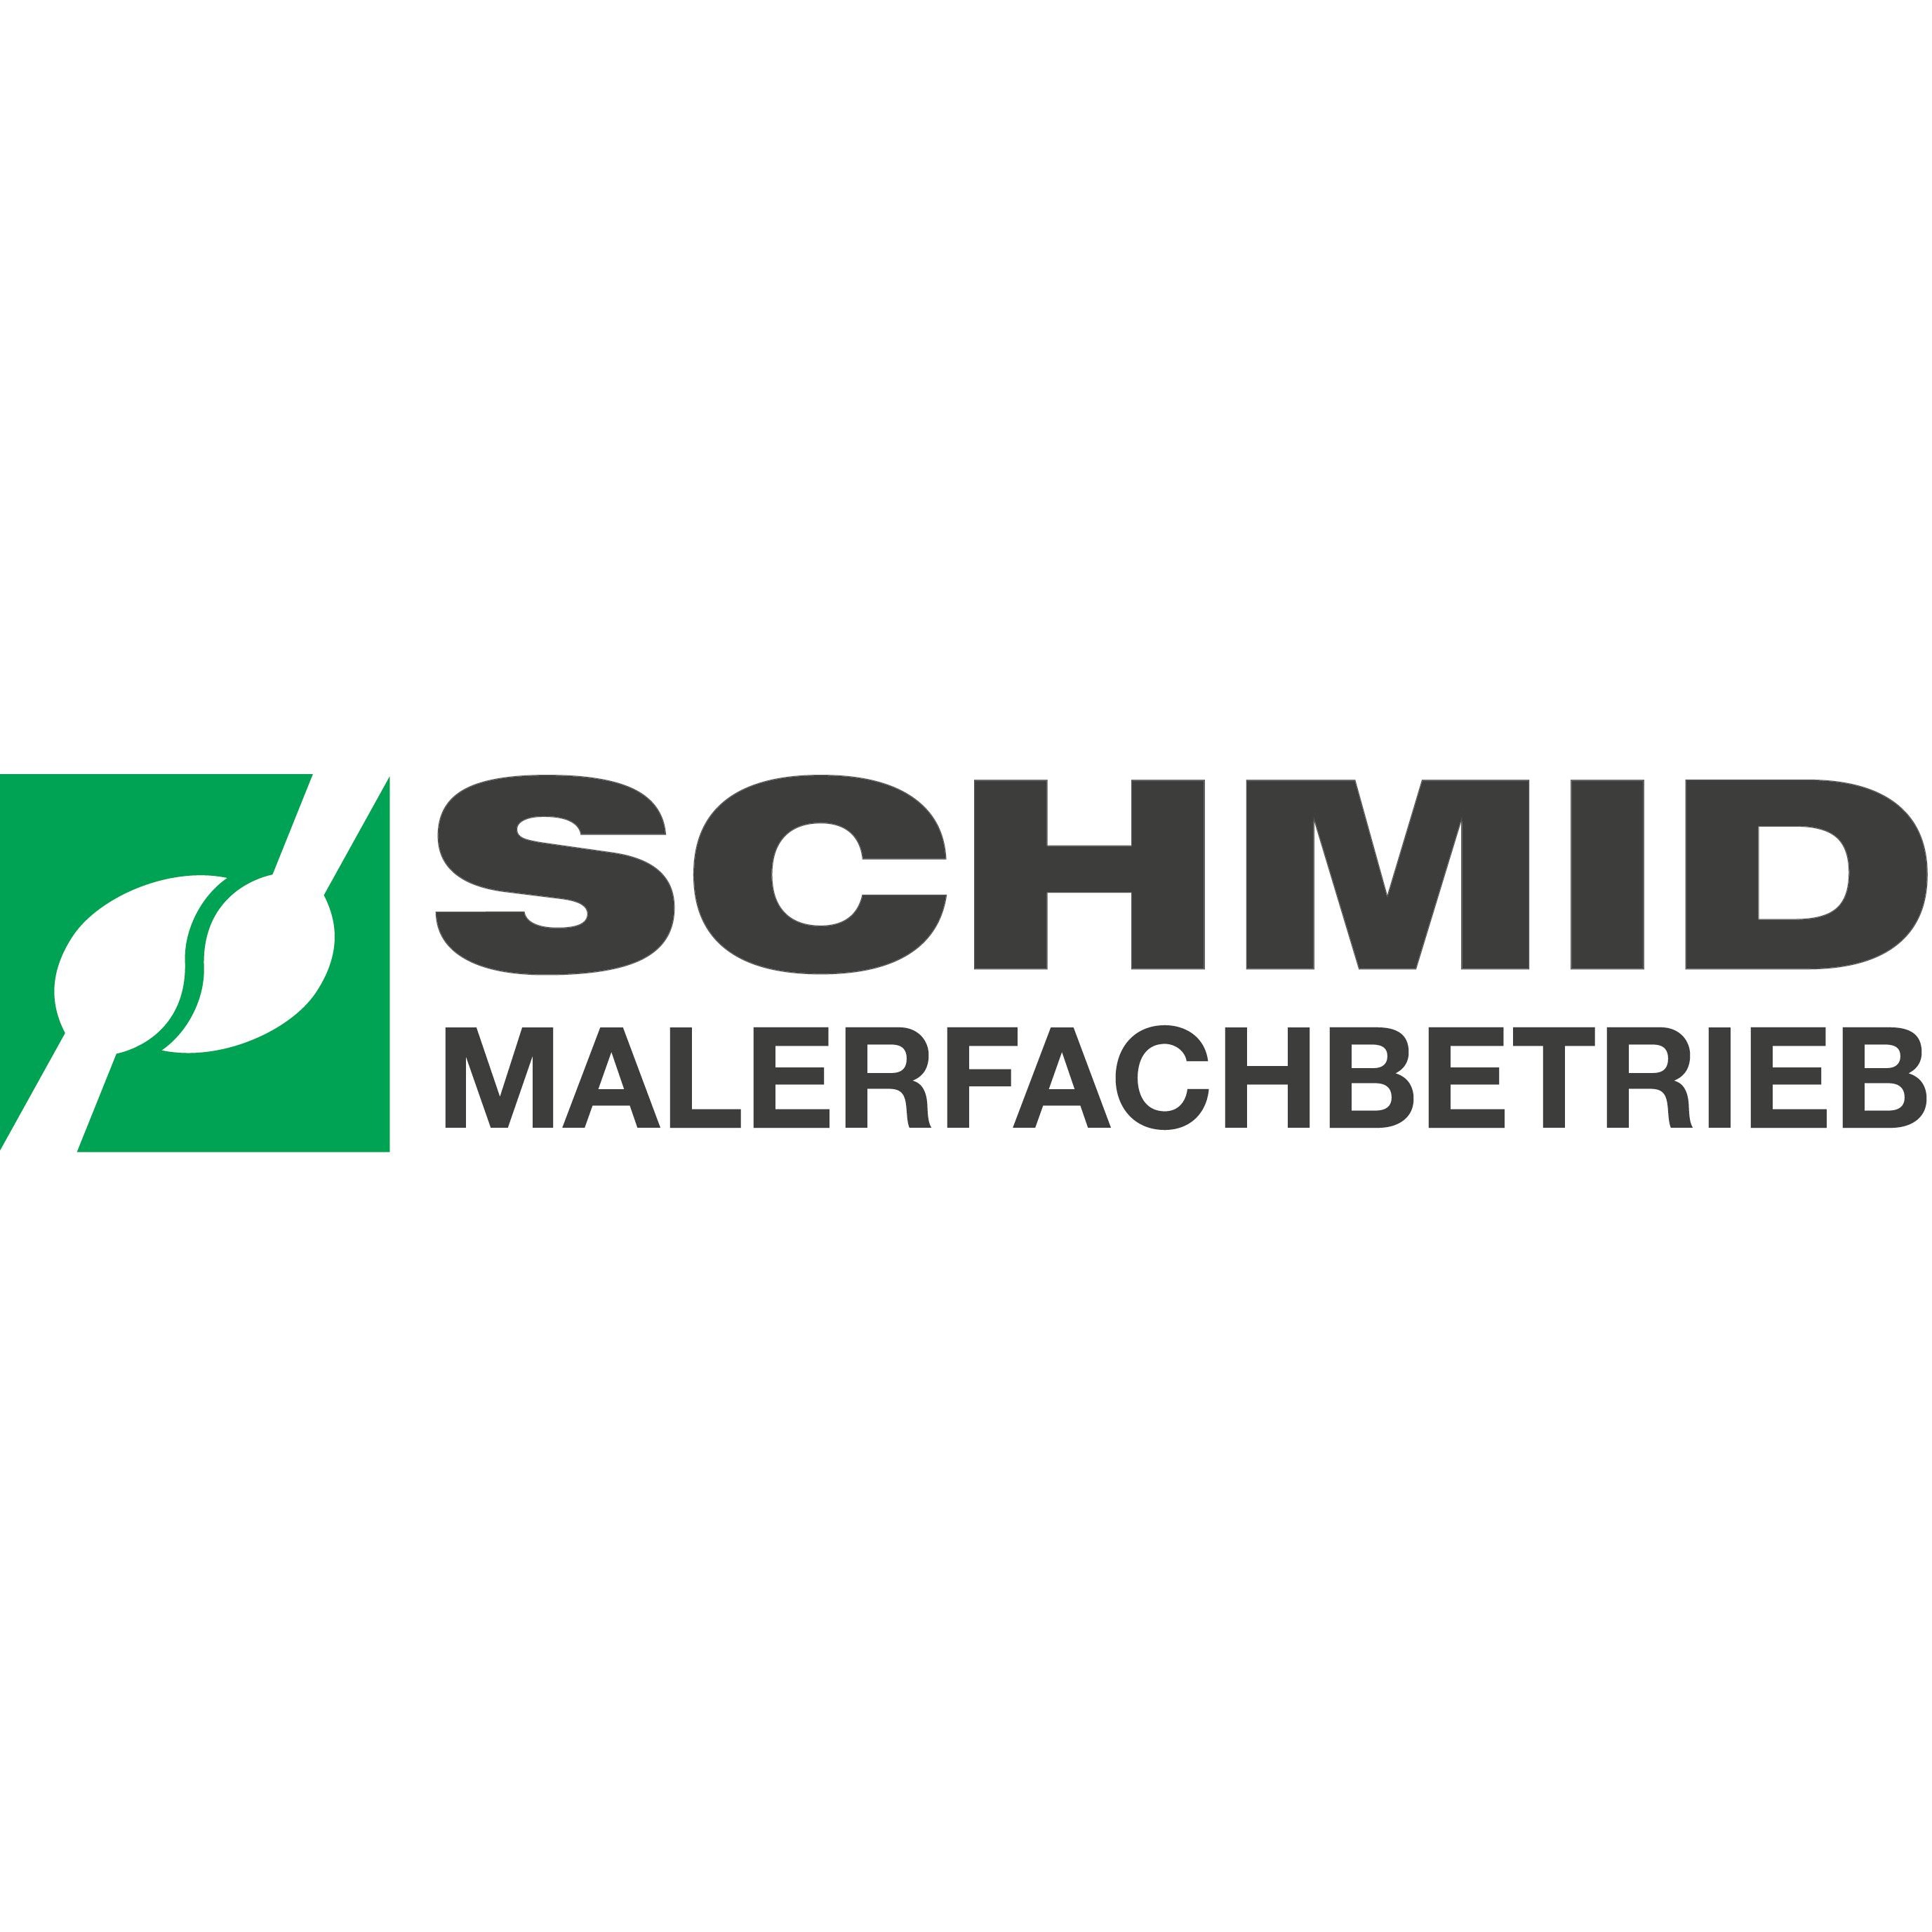 Malerfachbetrieb | Johann Schmid | München Logo